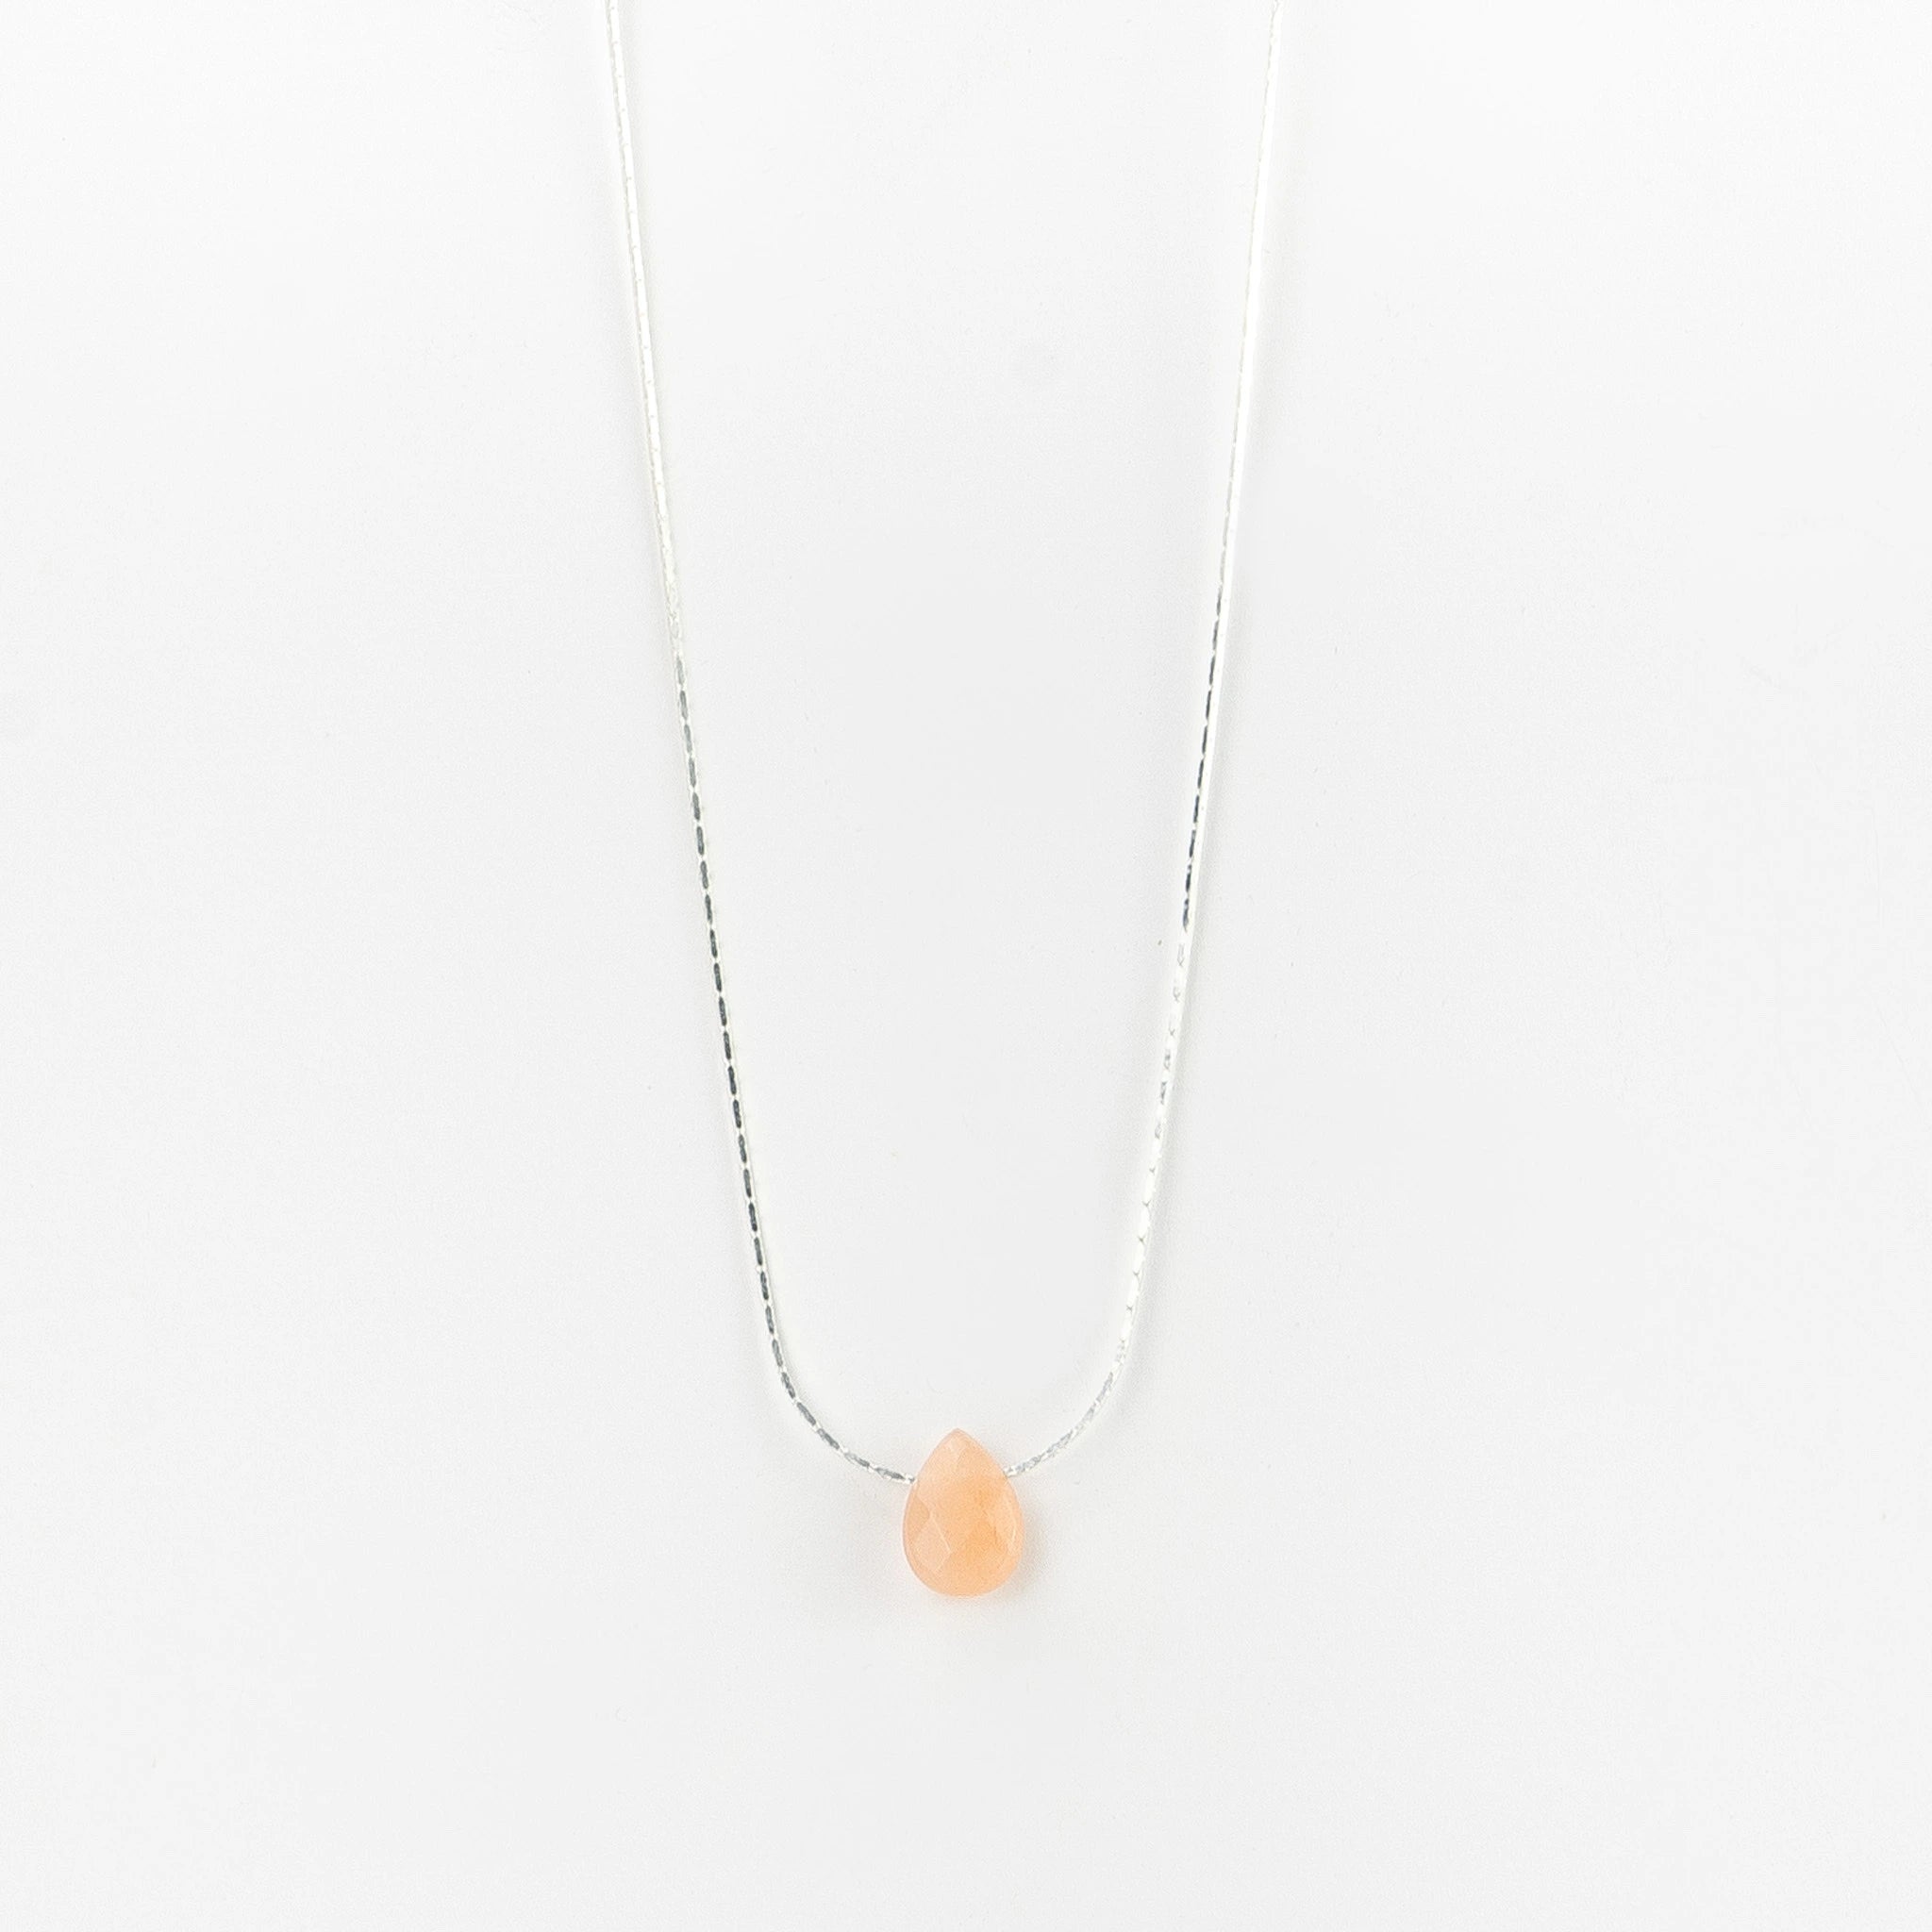 Samudra Pink Teardrop Stone Necklace - Pineapple Island